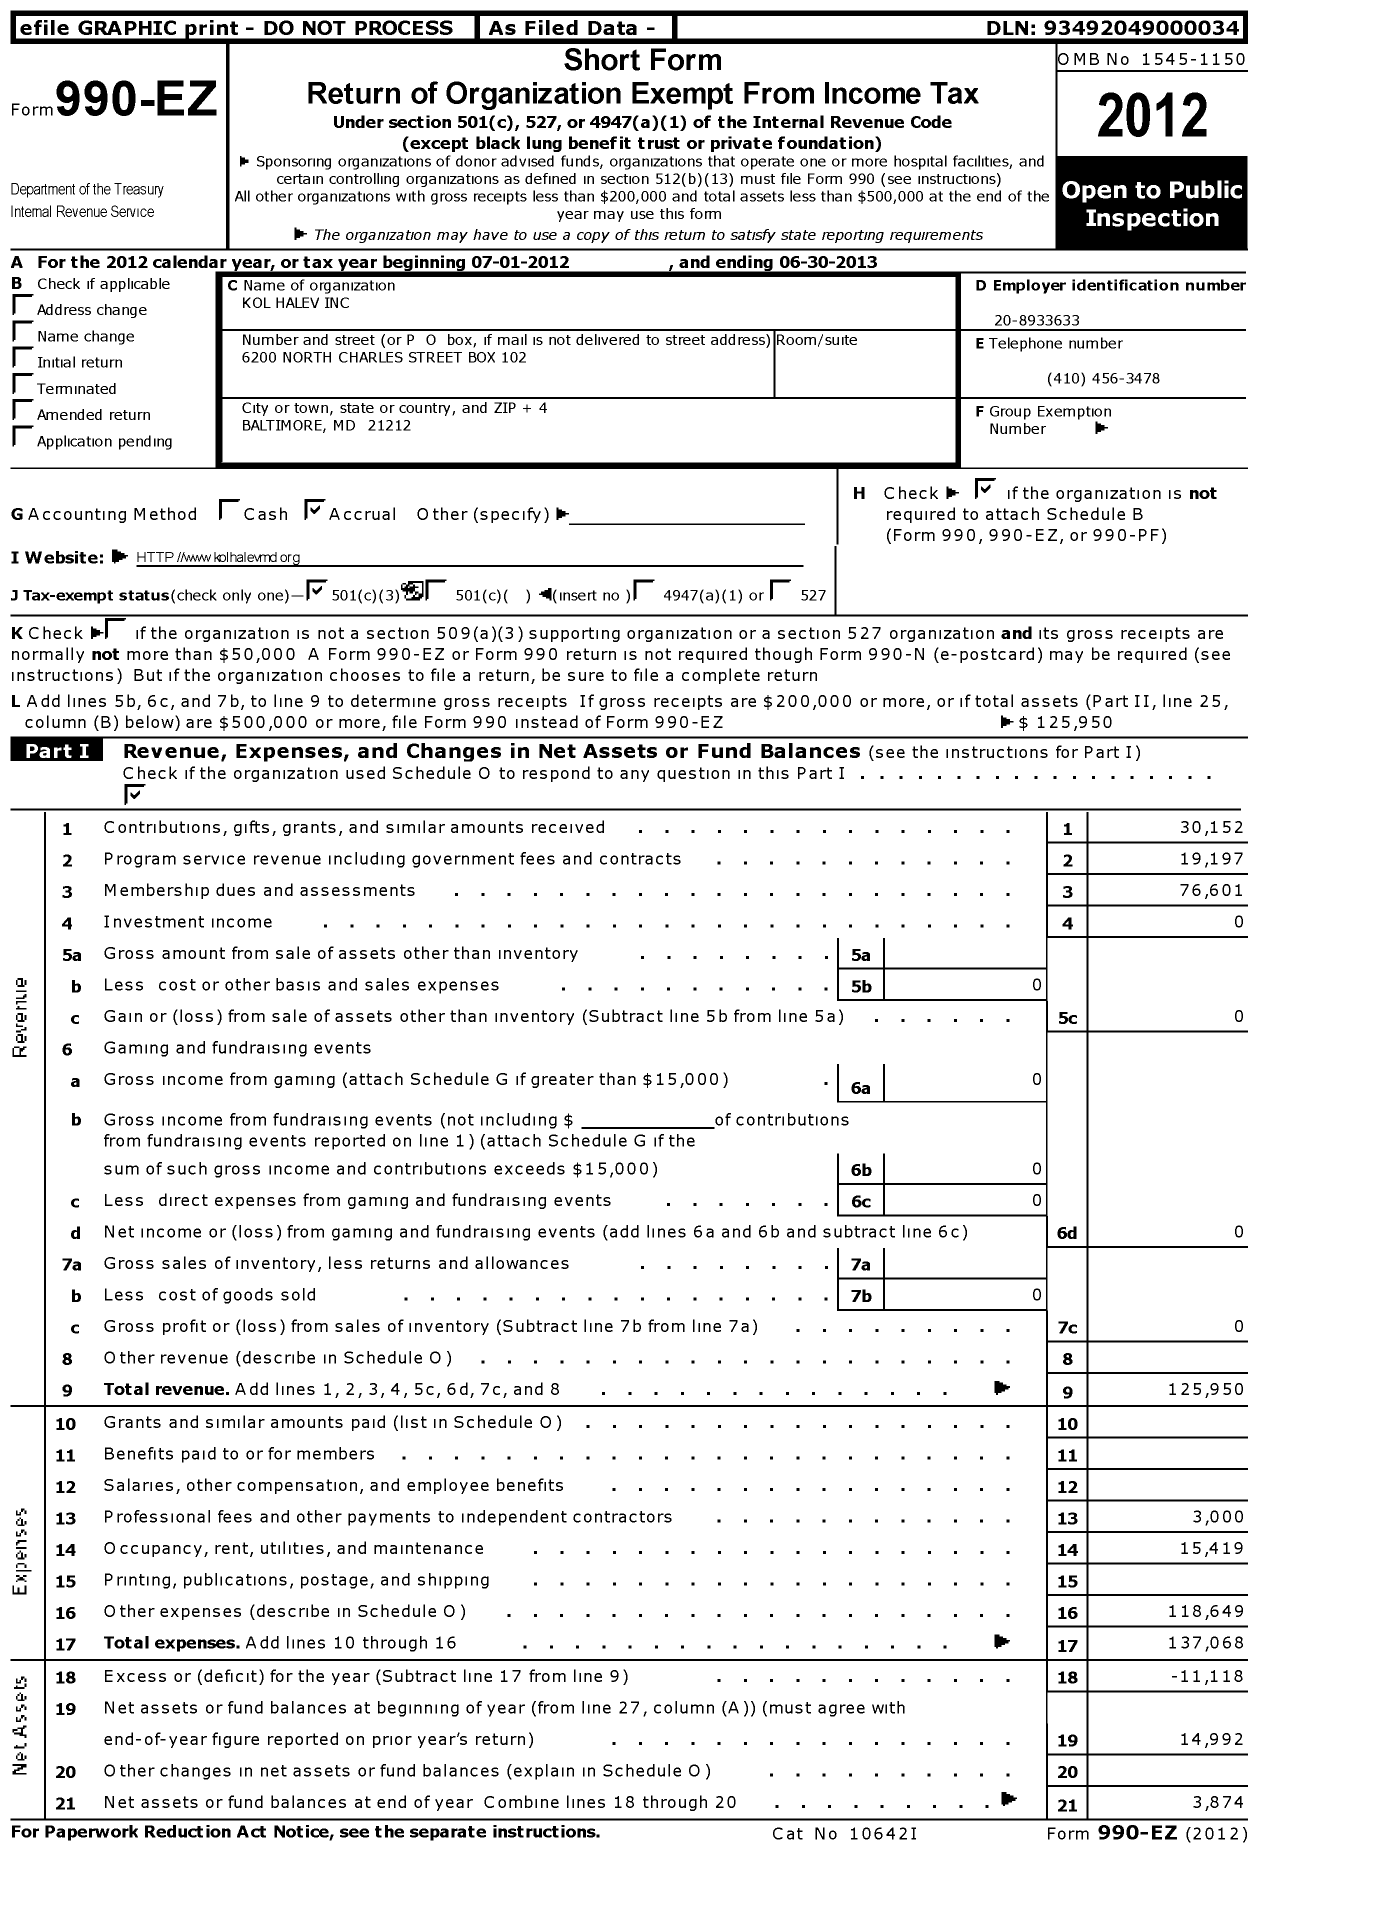 Image of first page of 2012 Form 990EZ for Kol Halev